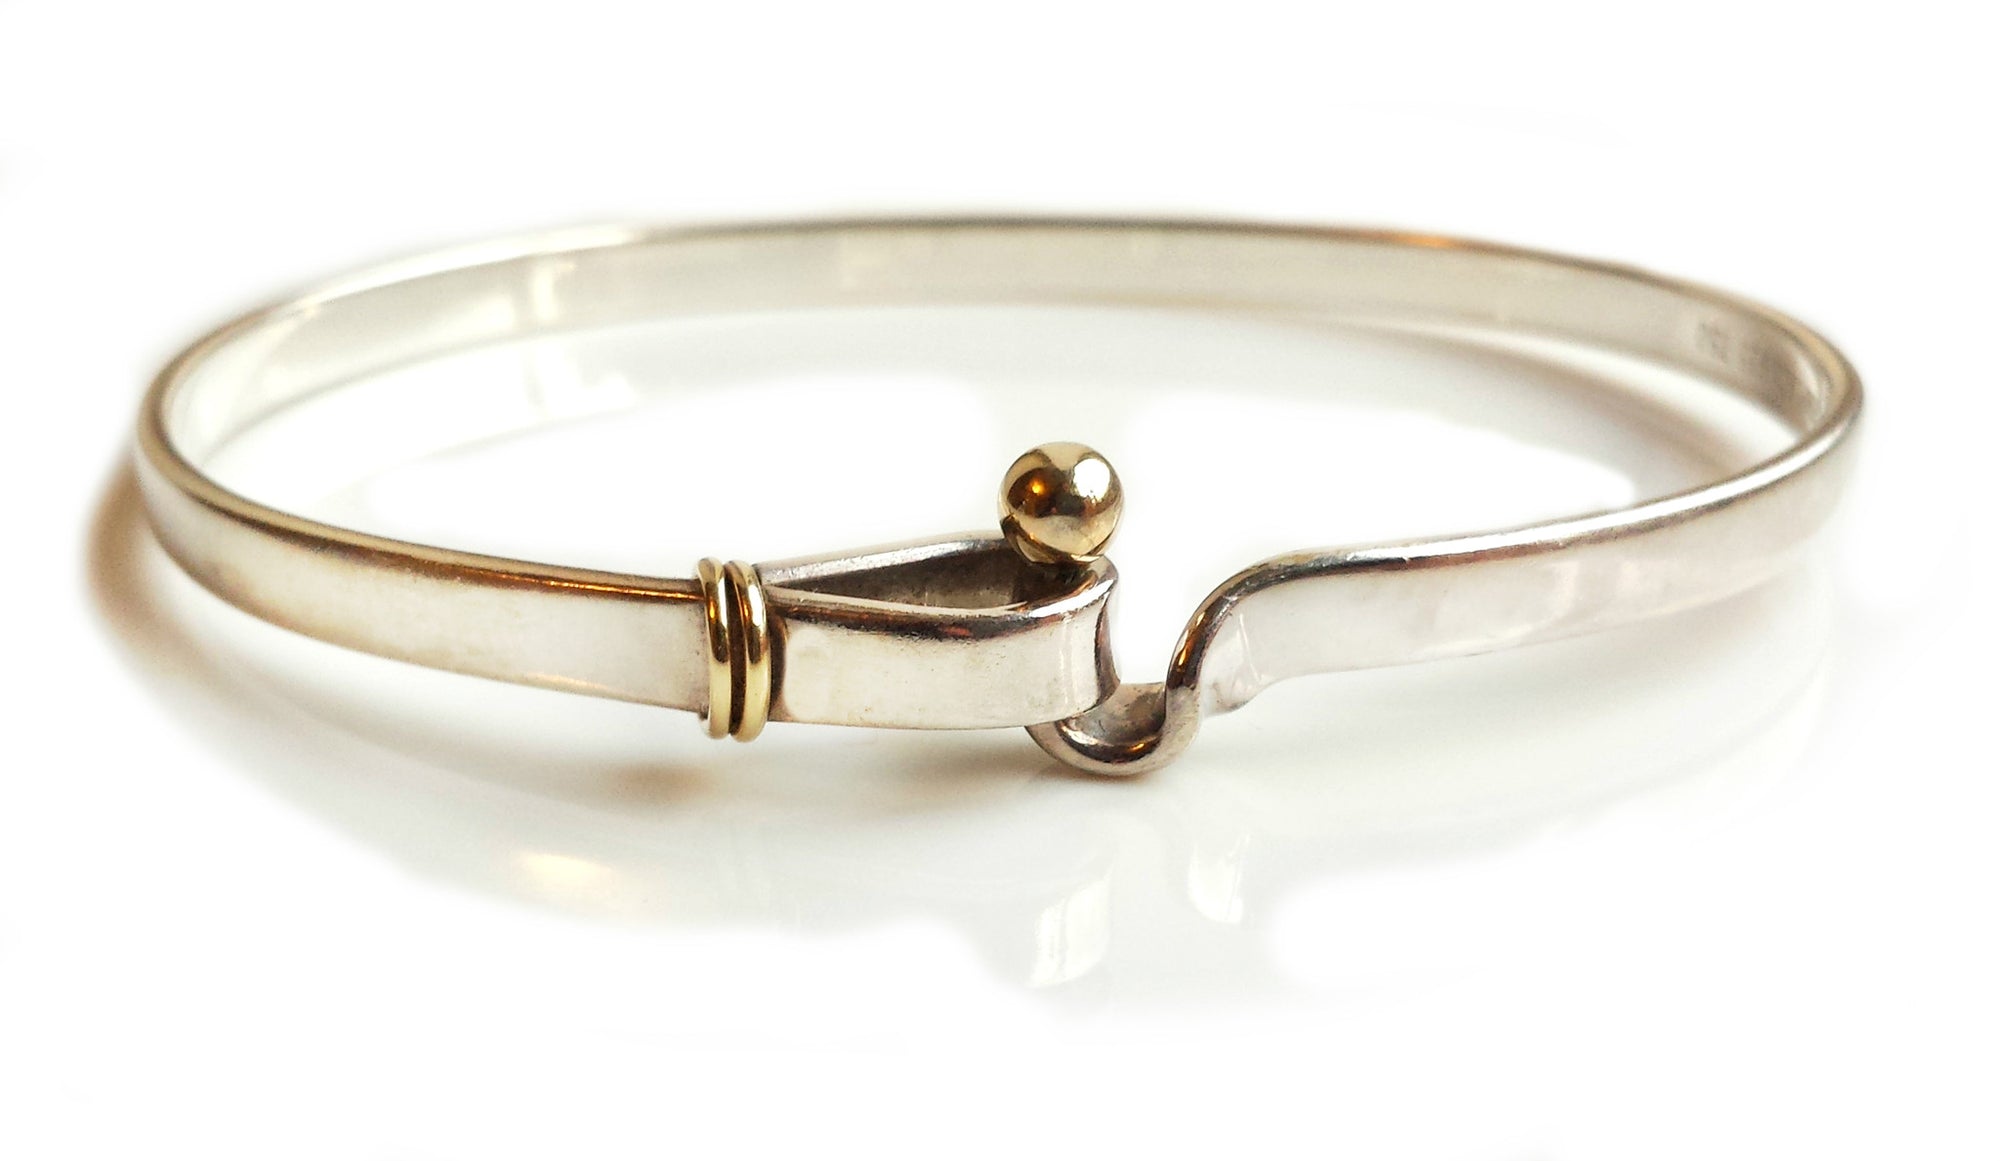 Vintage Tiffany & Co. Hook & Eye Bracelet in Sterling Silver & 18k Gol -  Bloomsbury Manor Ltd